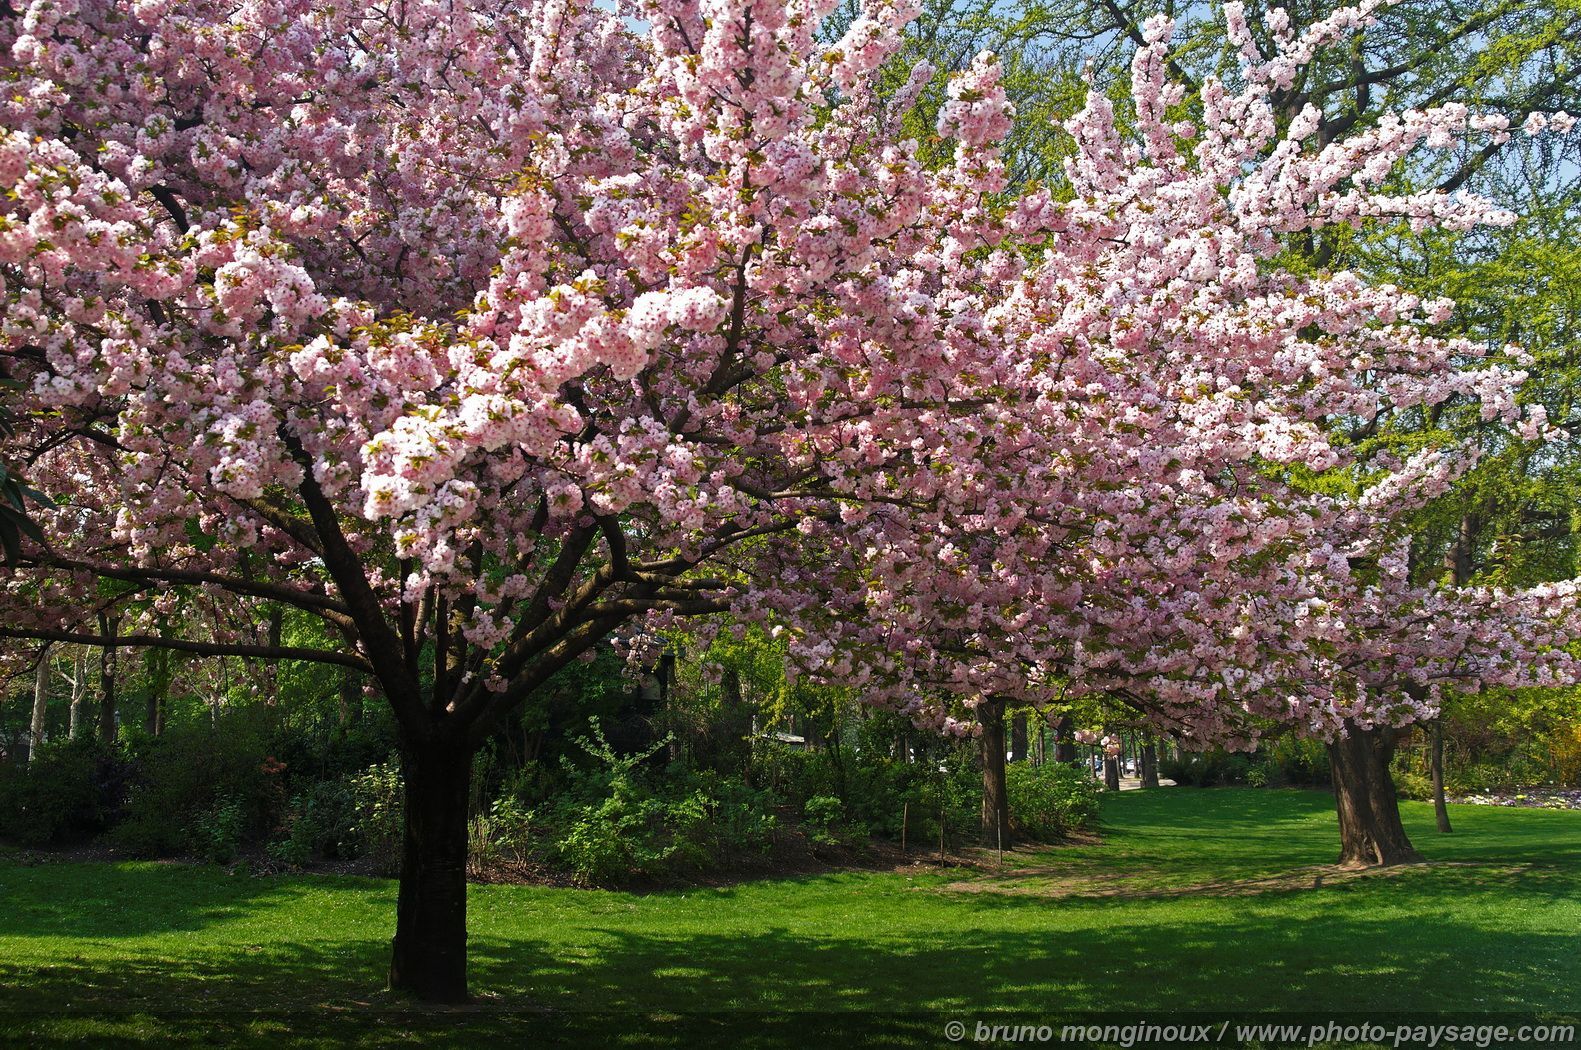 Download wallpaper: blooming trees, download photo, desktop wallpaper